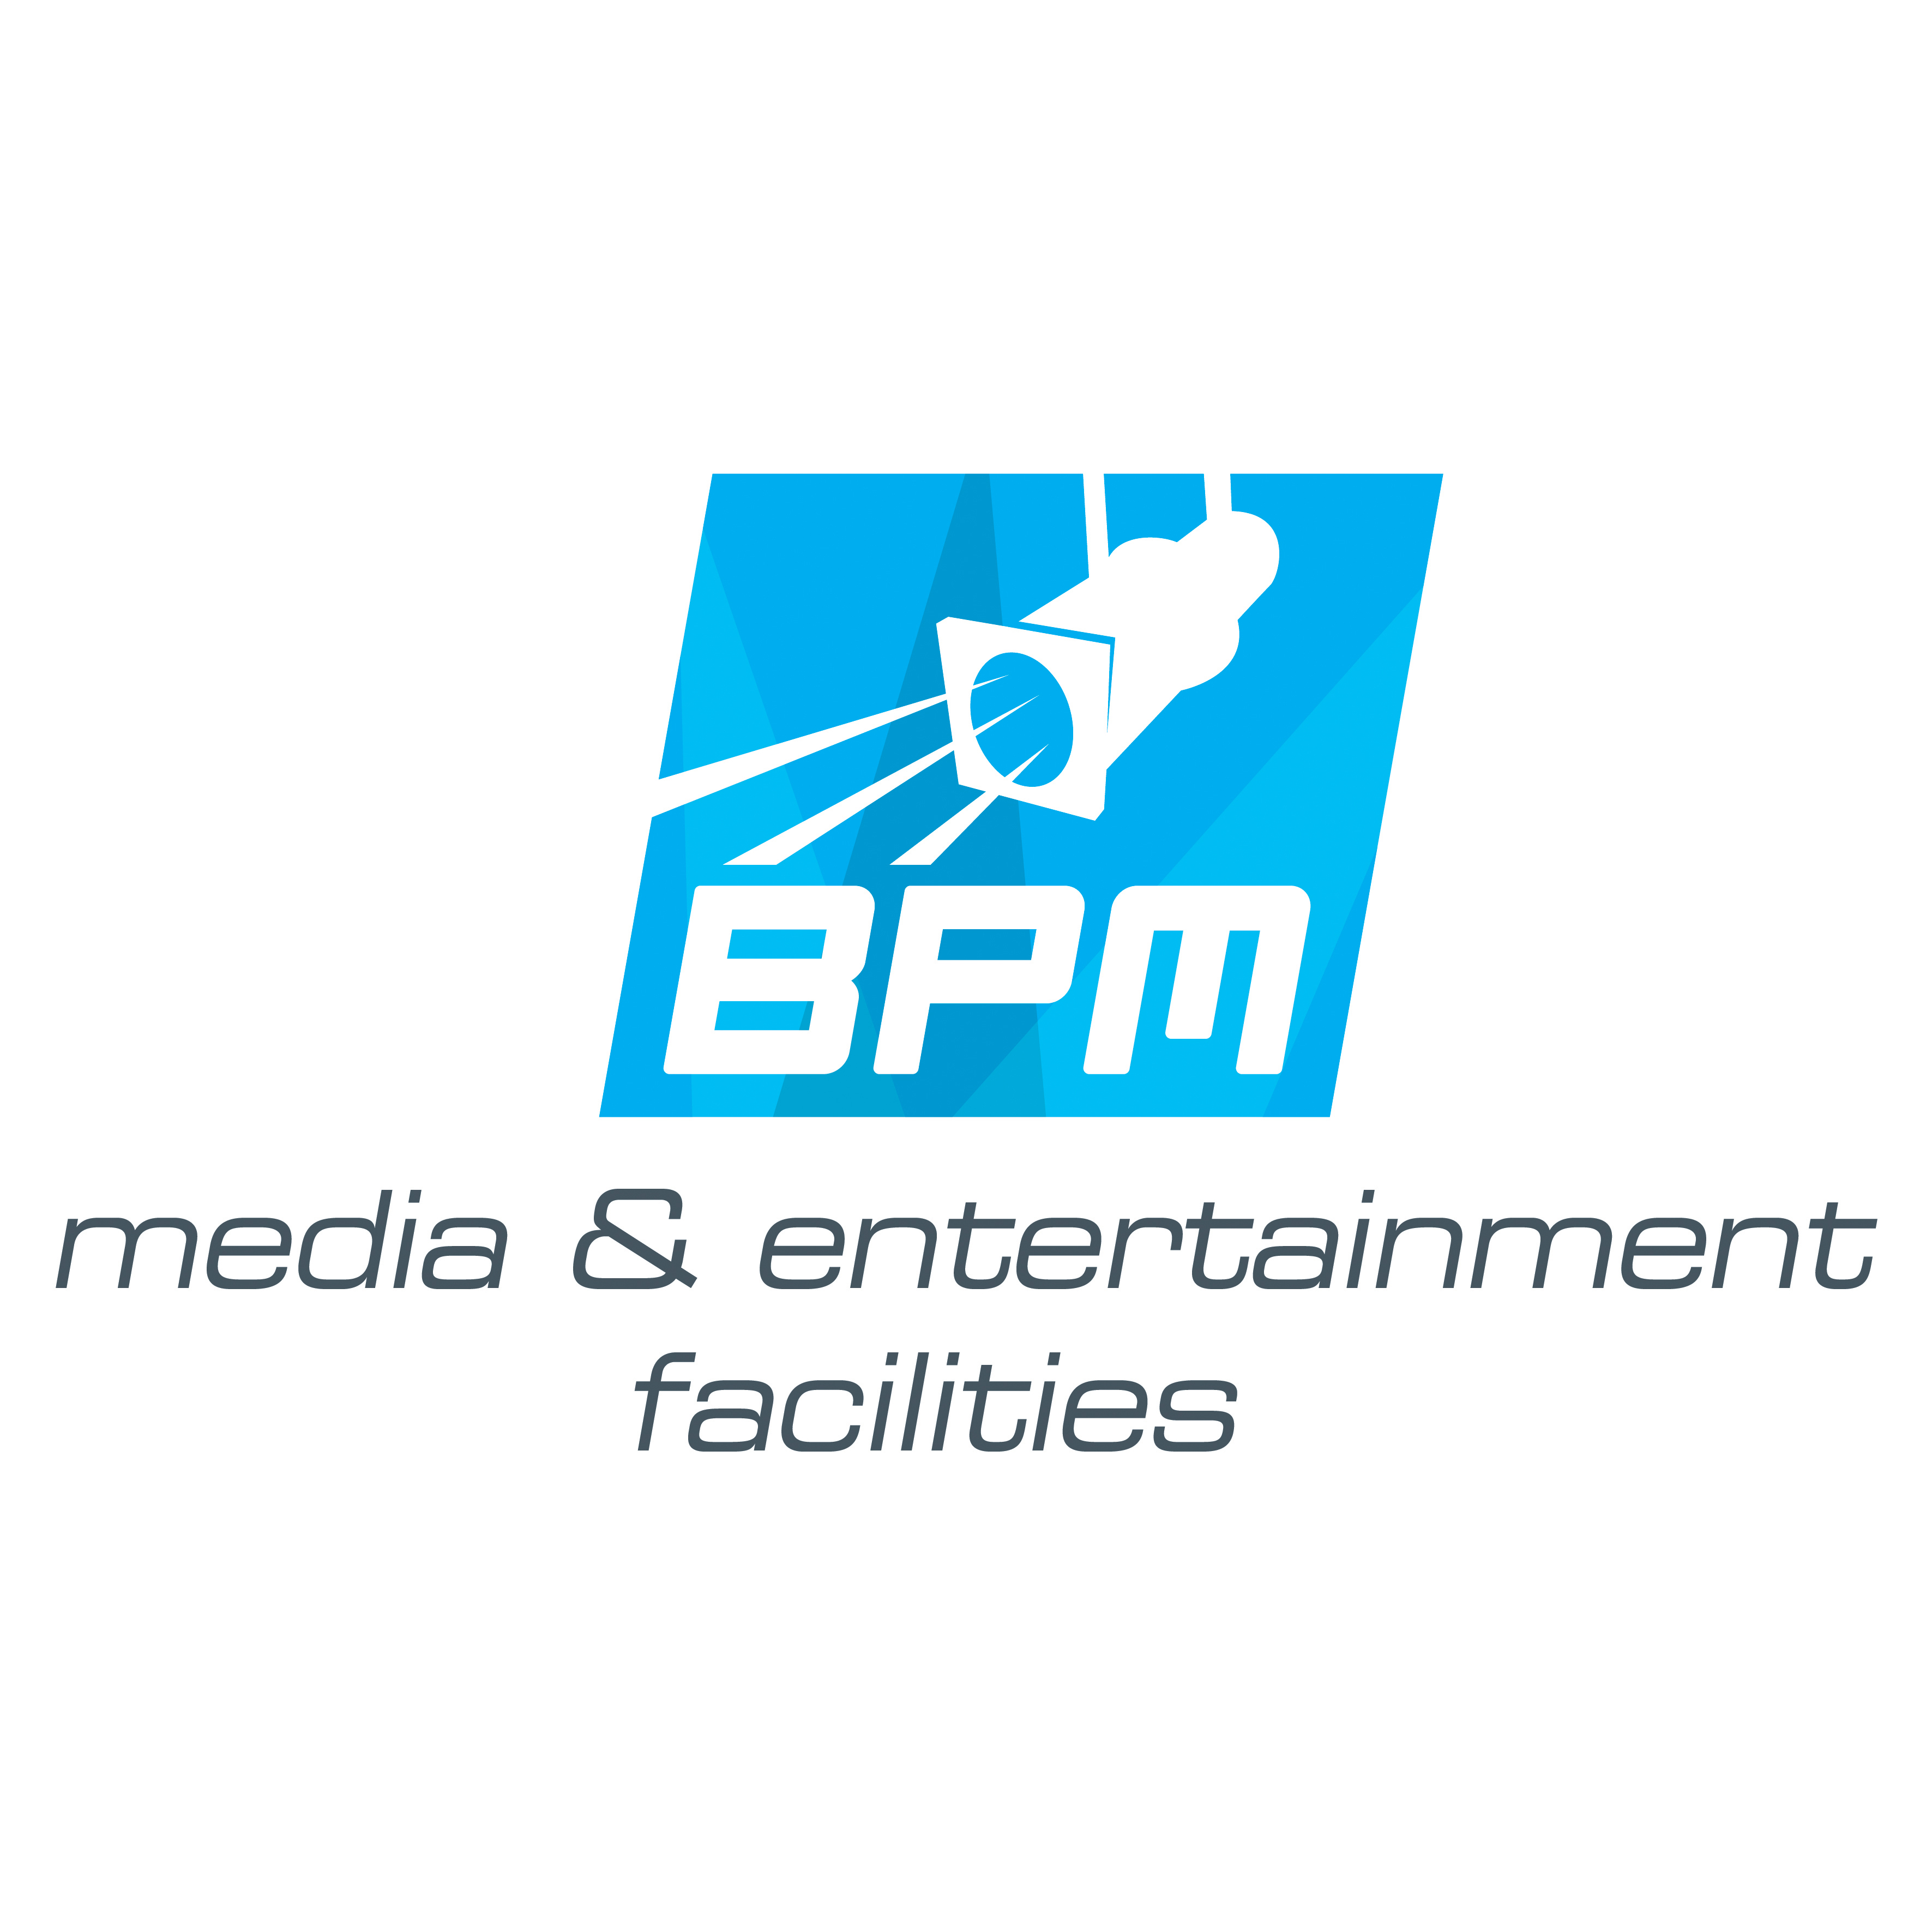 BPM Media & Entertainment Facilities